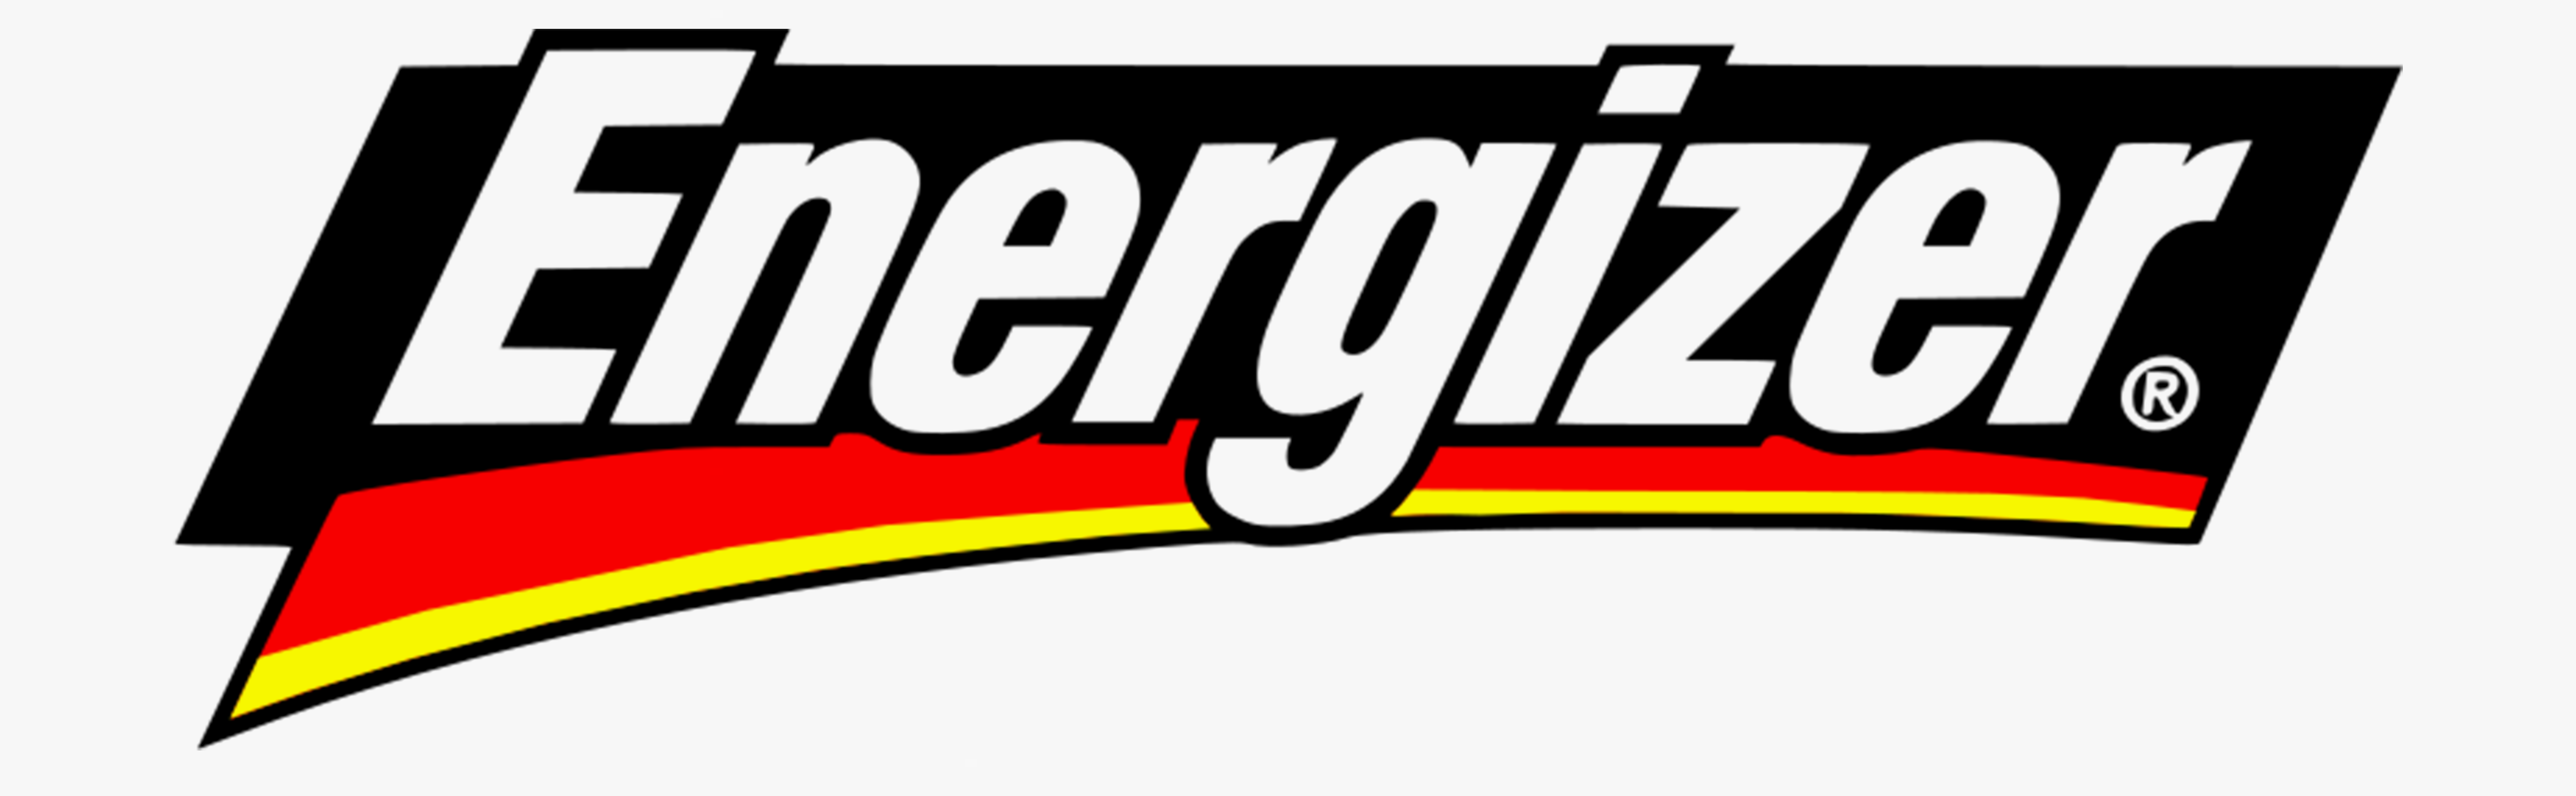 Energizer Battery, Inc.